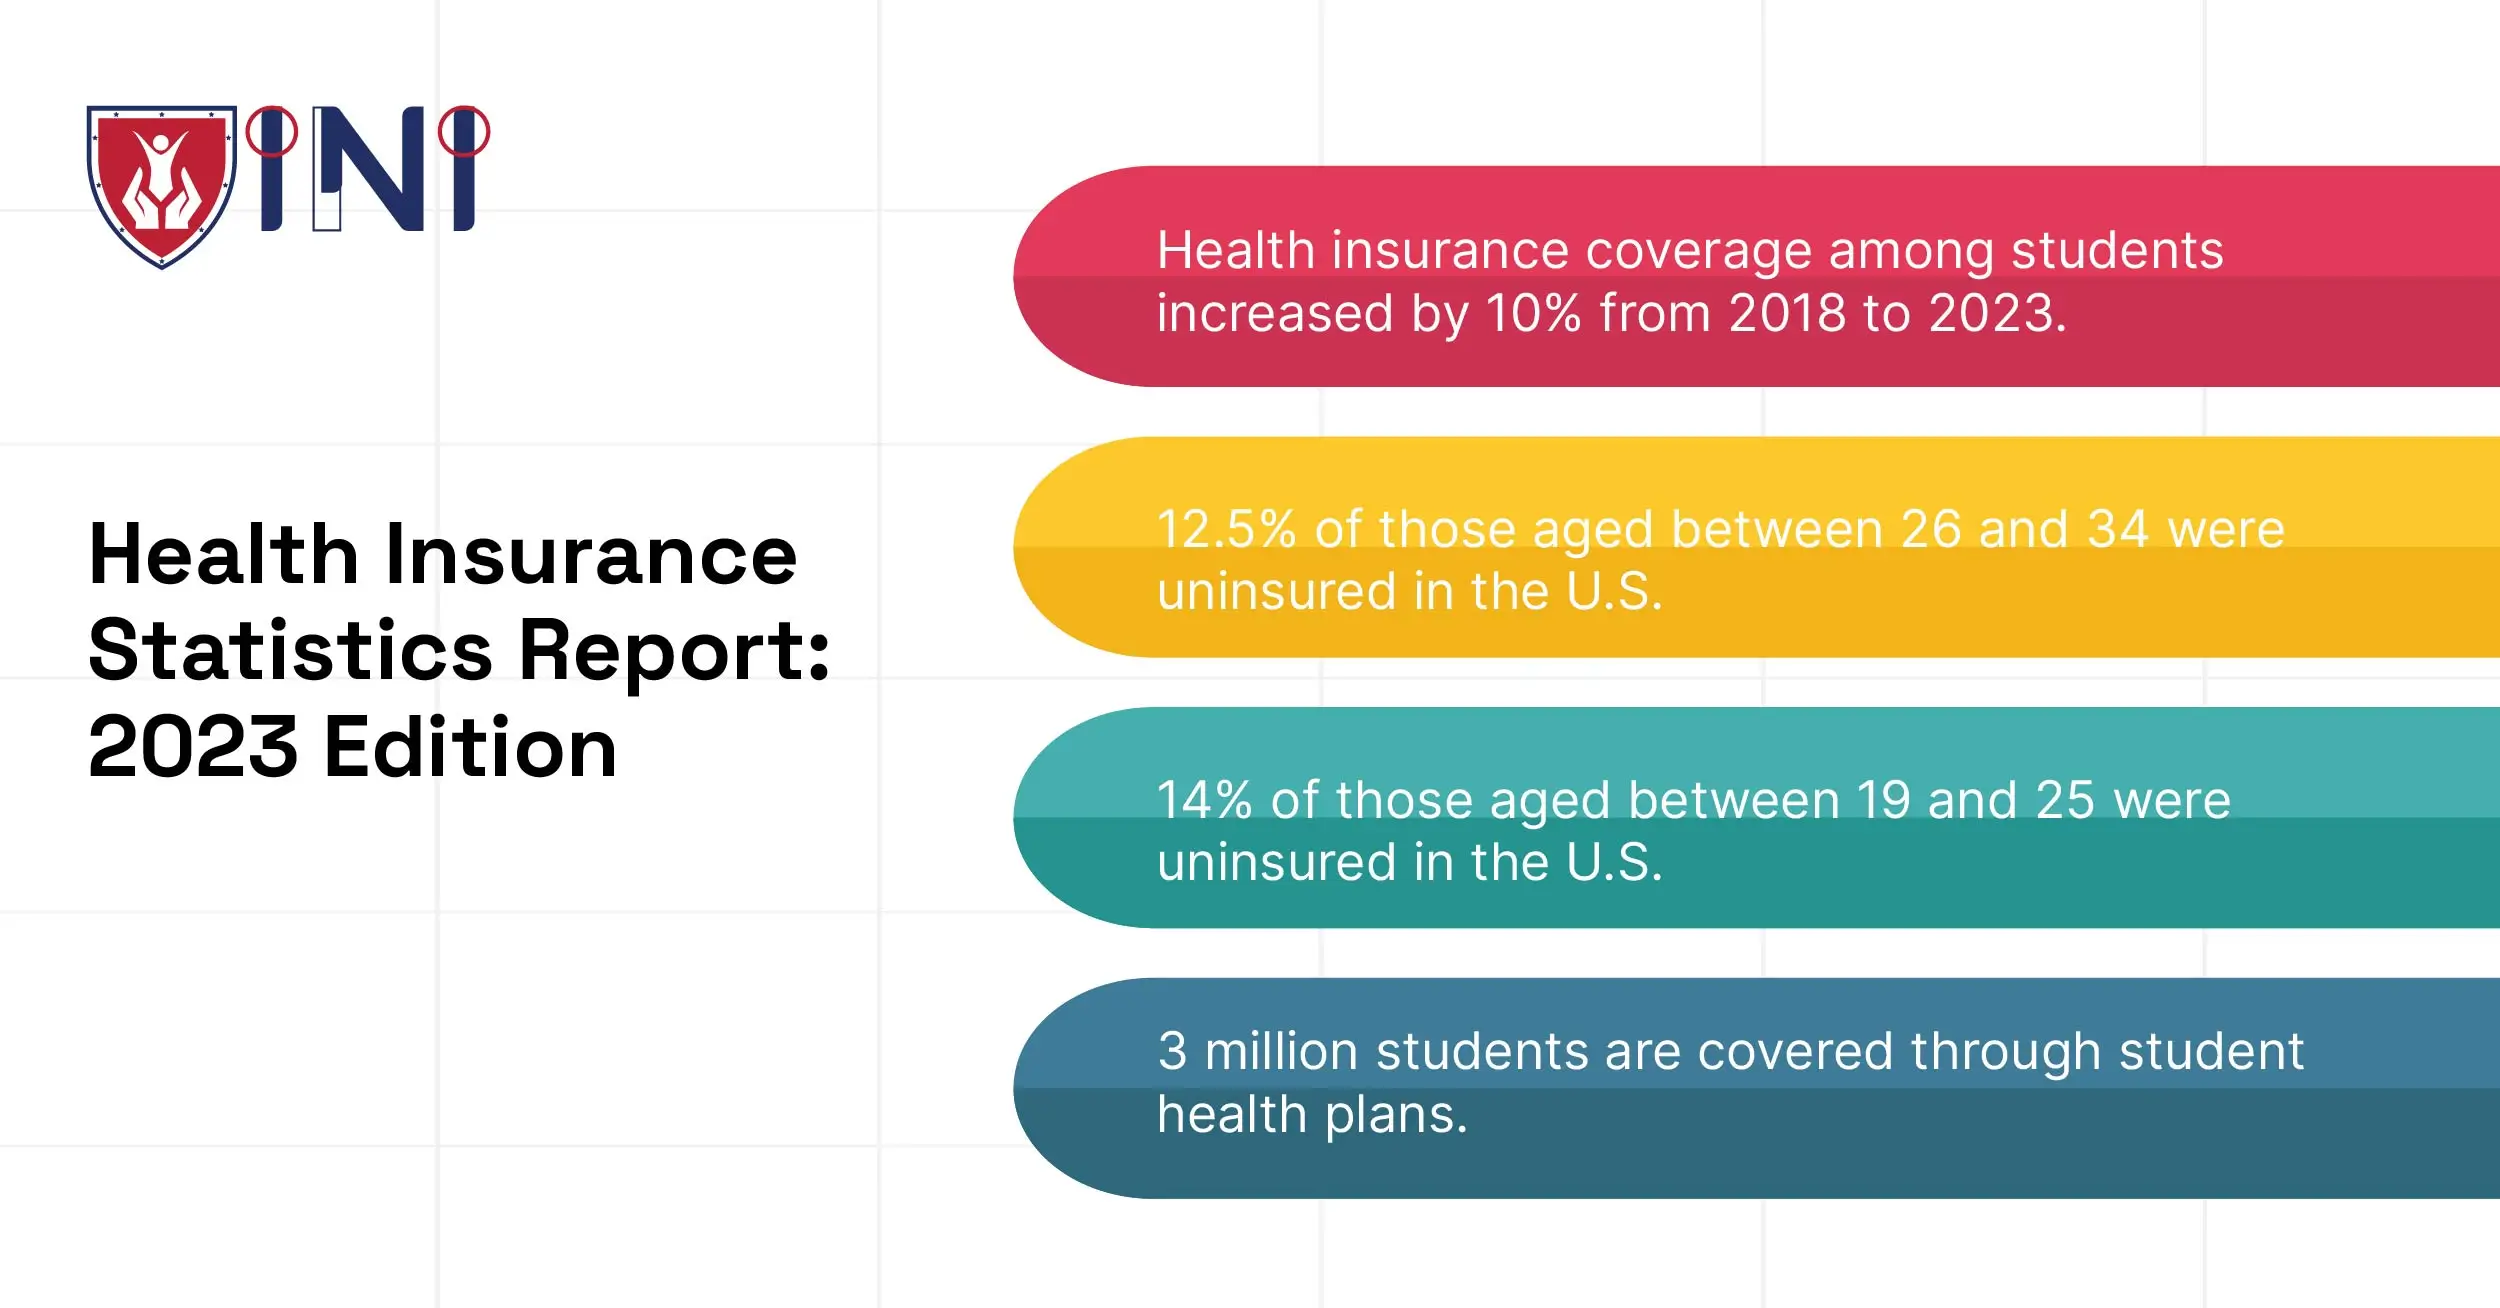 Health insurance statistics report: 2023 Edition